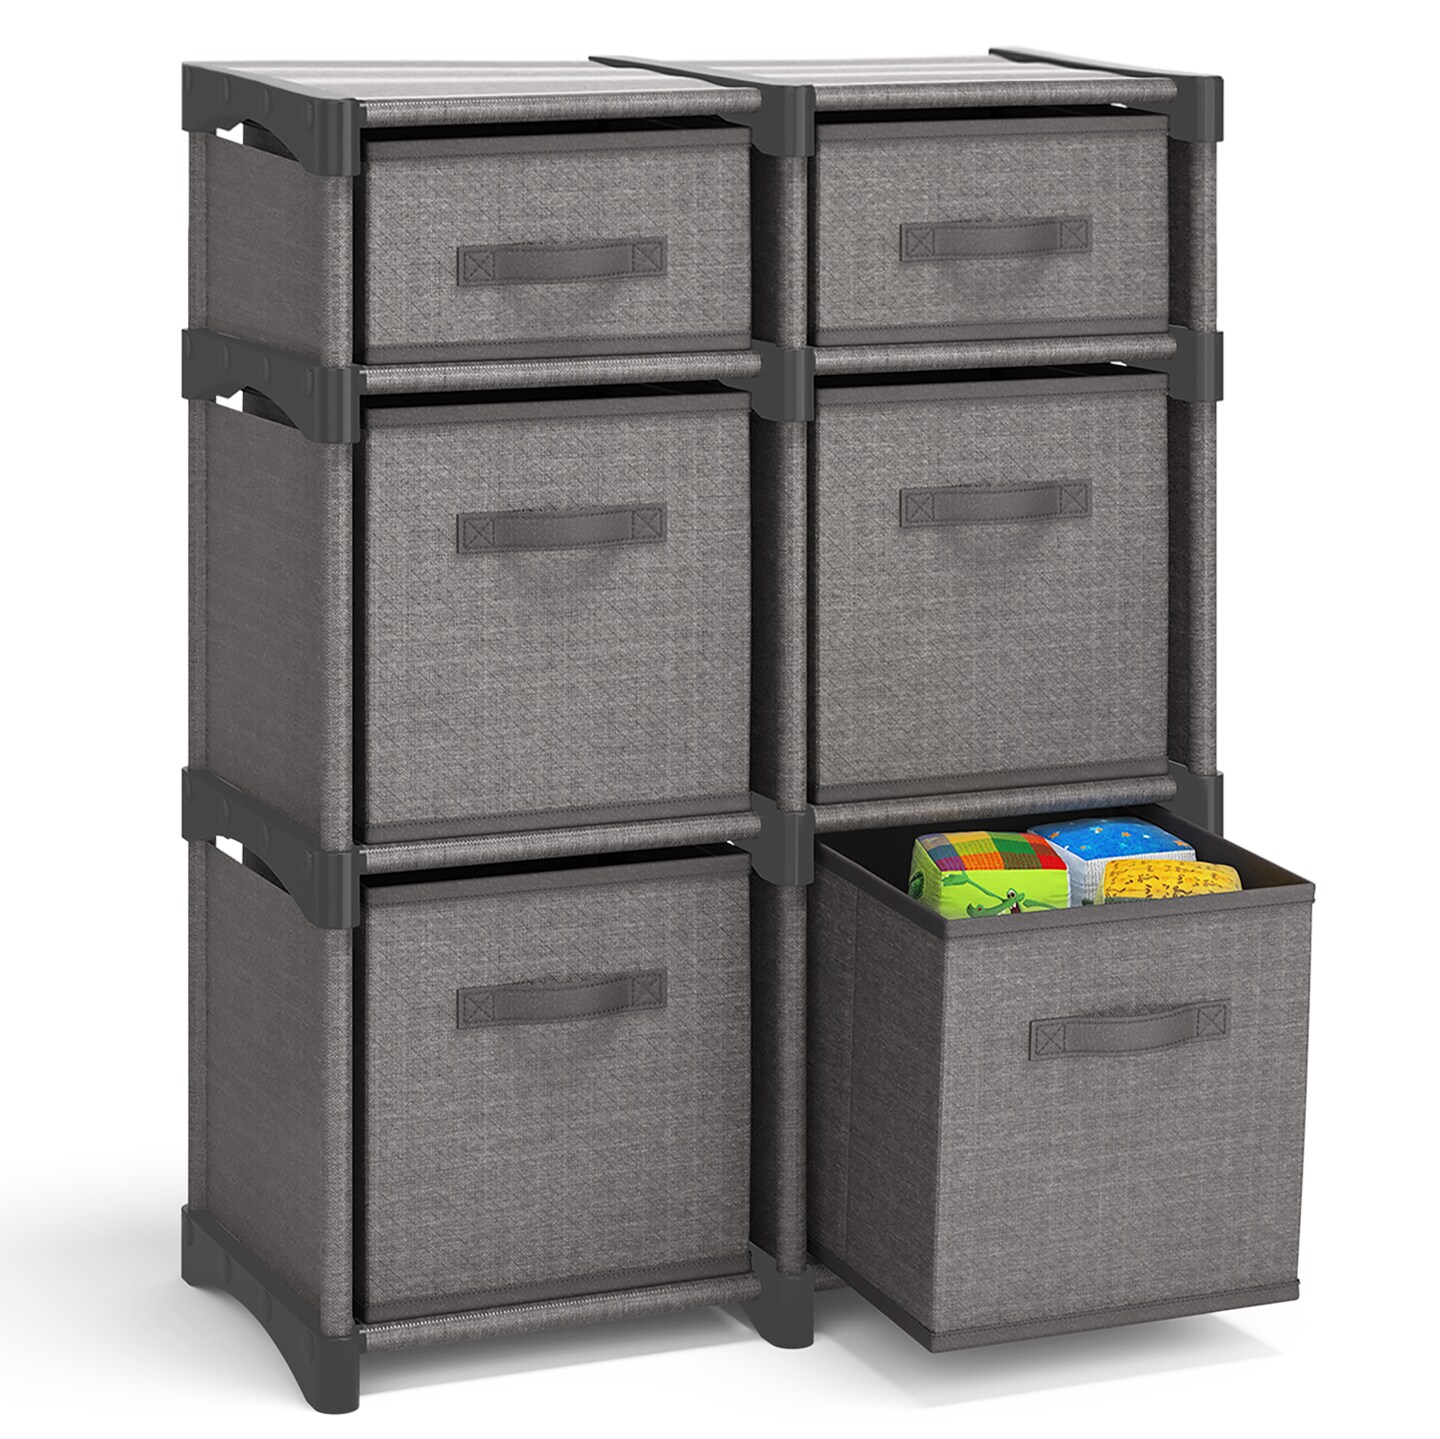 Danoni 2 Gallon Clear Storage Bins with Lids 4 Pack, Storage